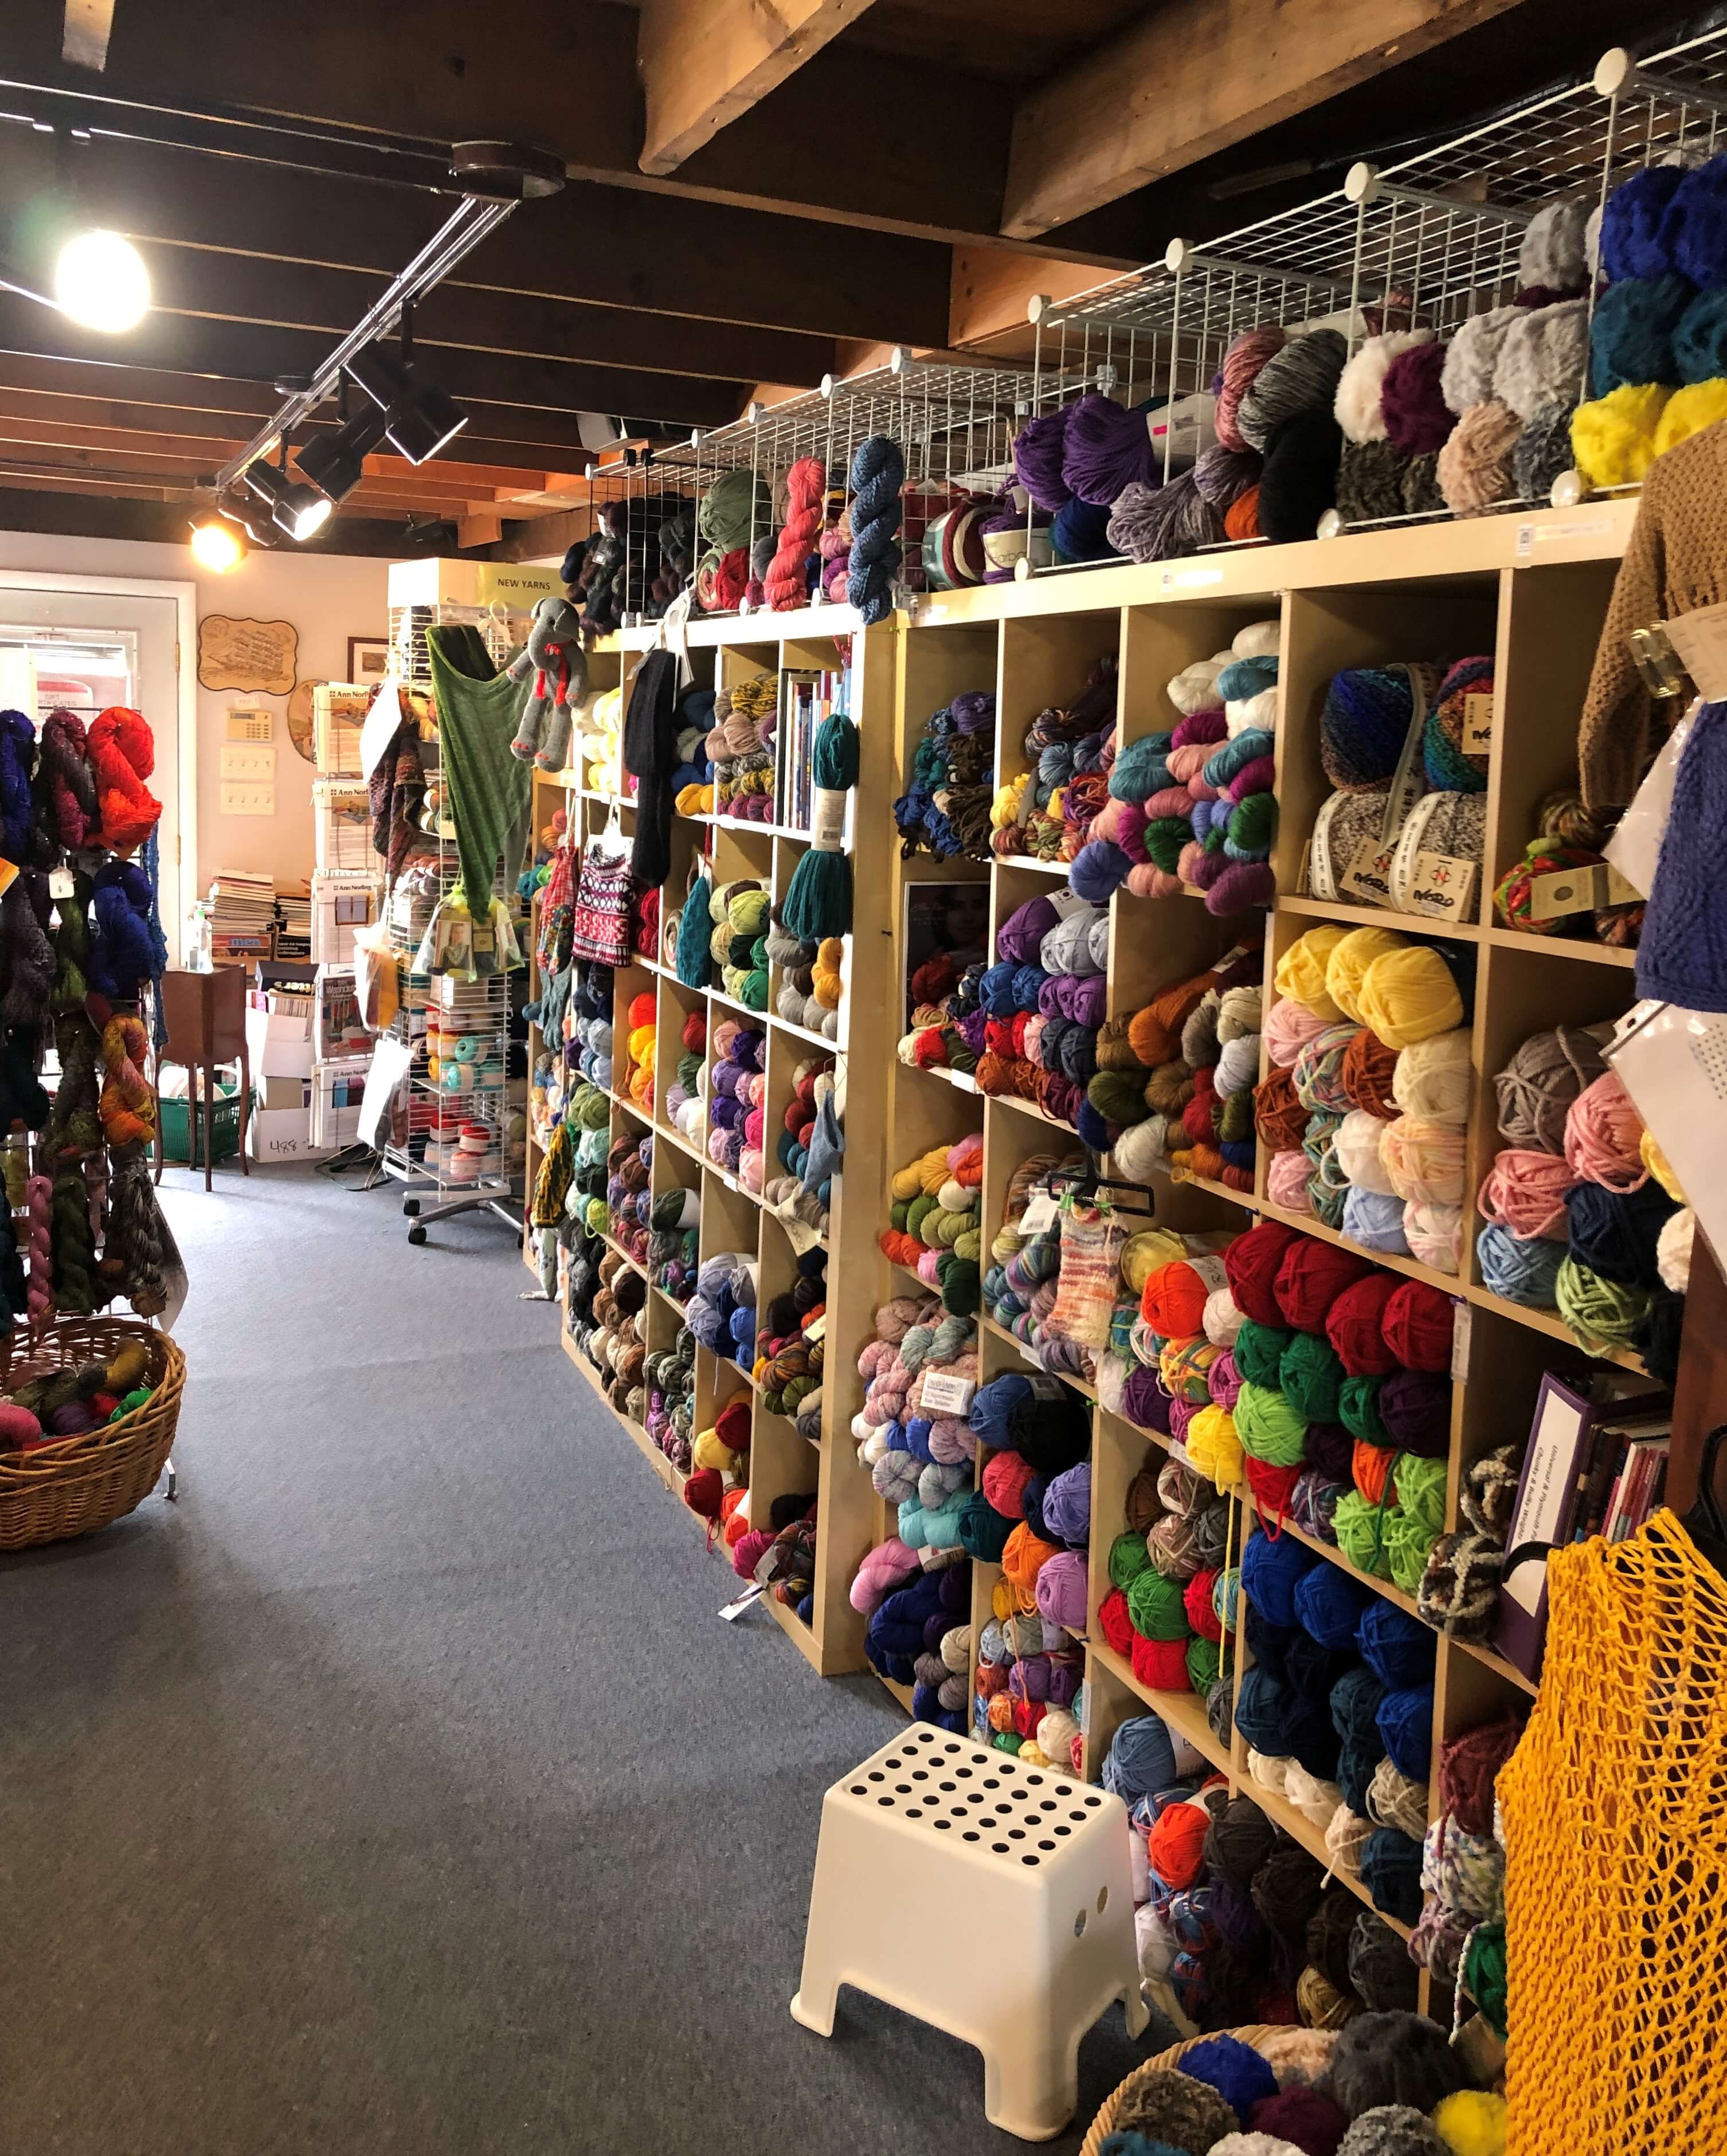 knitting magazines, notions, and yarn on display at Yarn Cloud